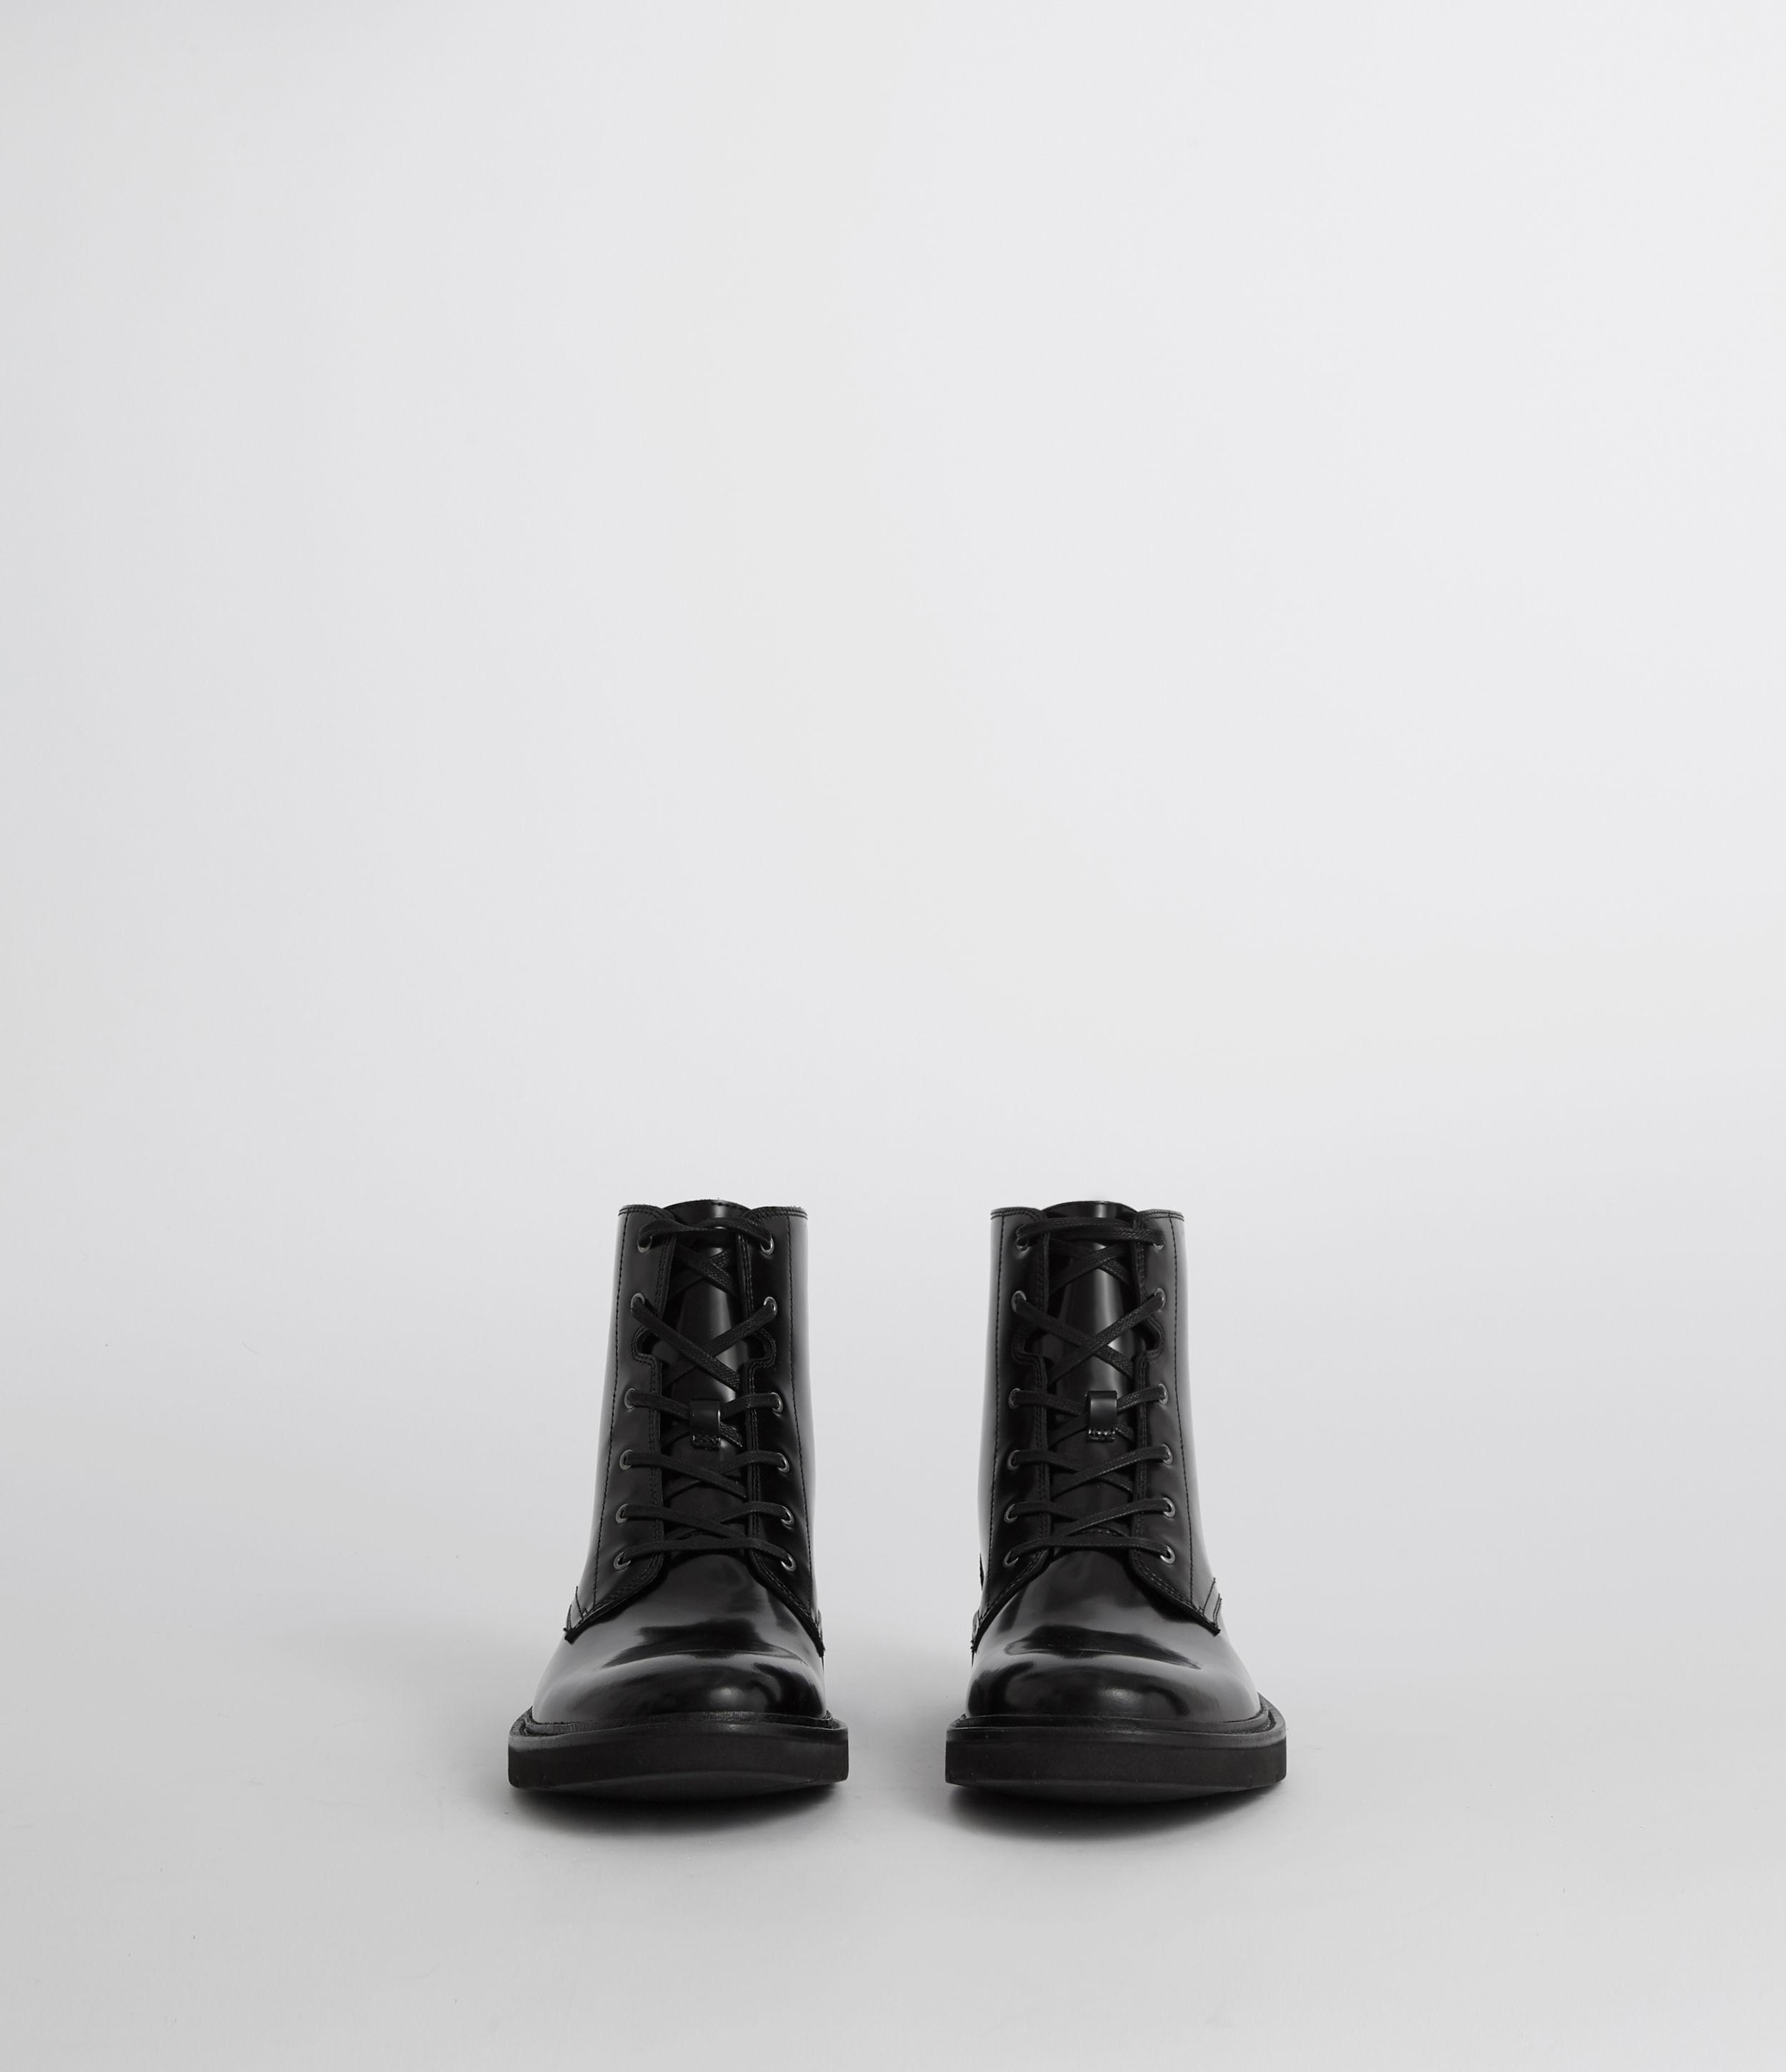 AllSaints Leather Nova Boot in Black for Men - Lyst